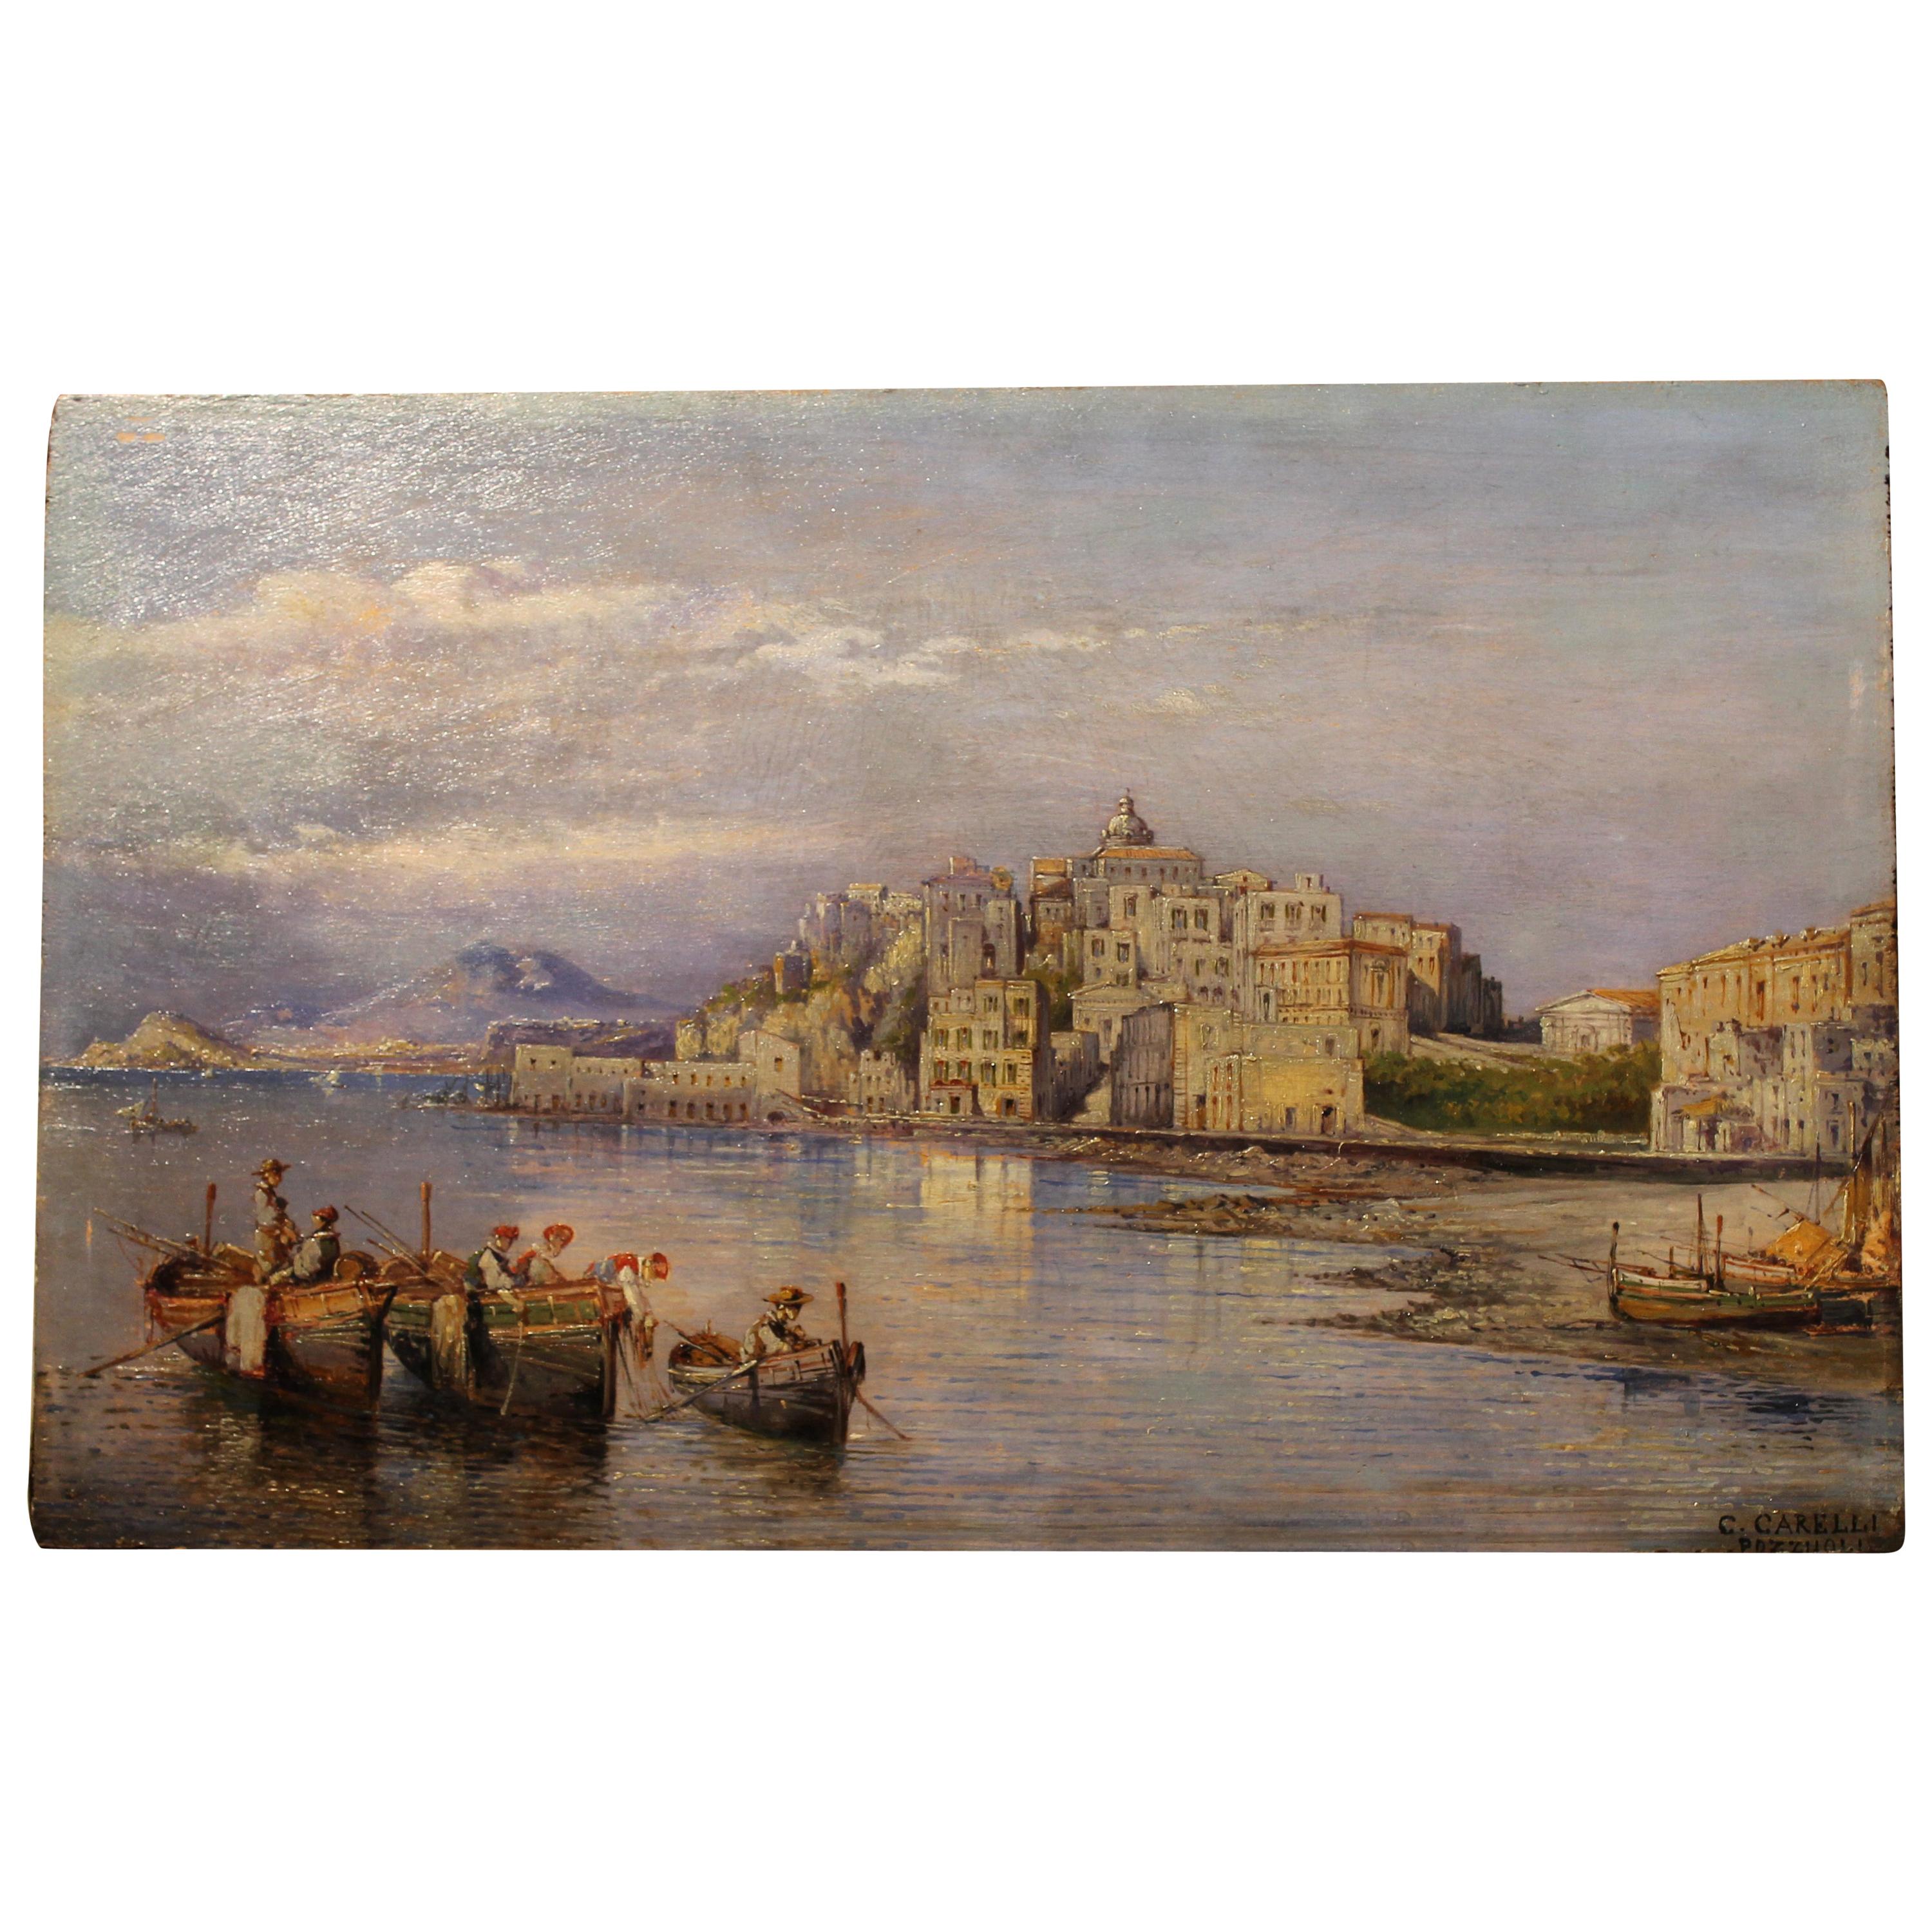 Carelli 19th Century Italian Rectangular Oil on Board Landscape Marine Painting